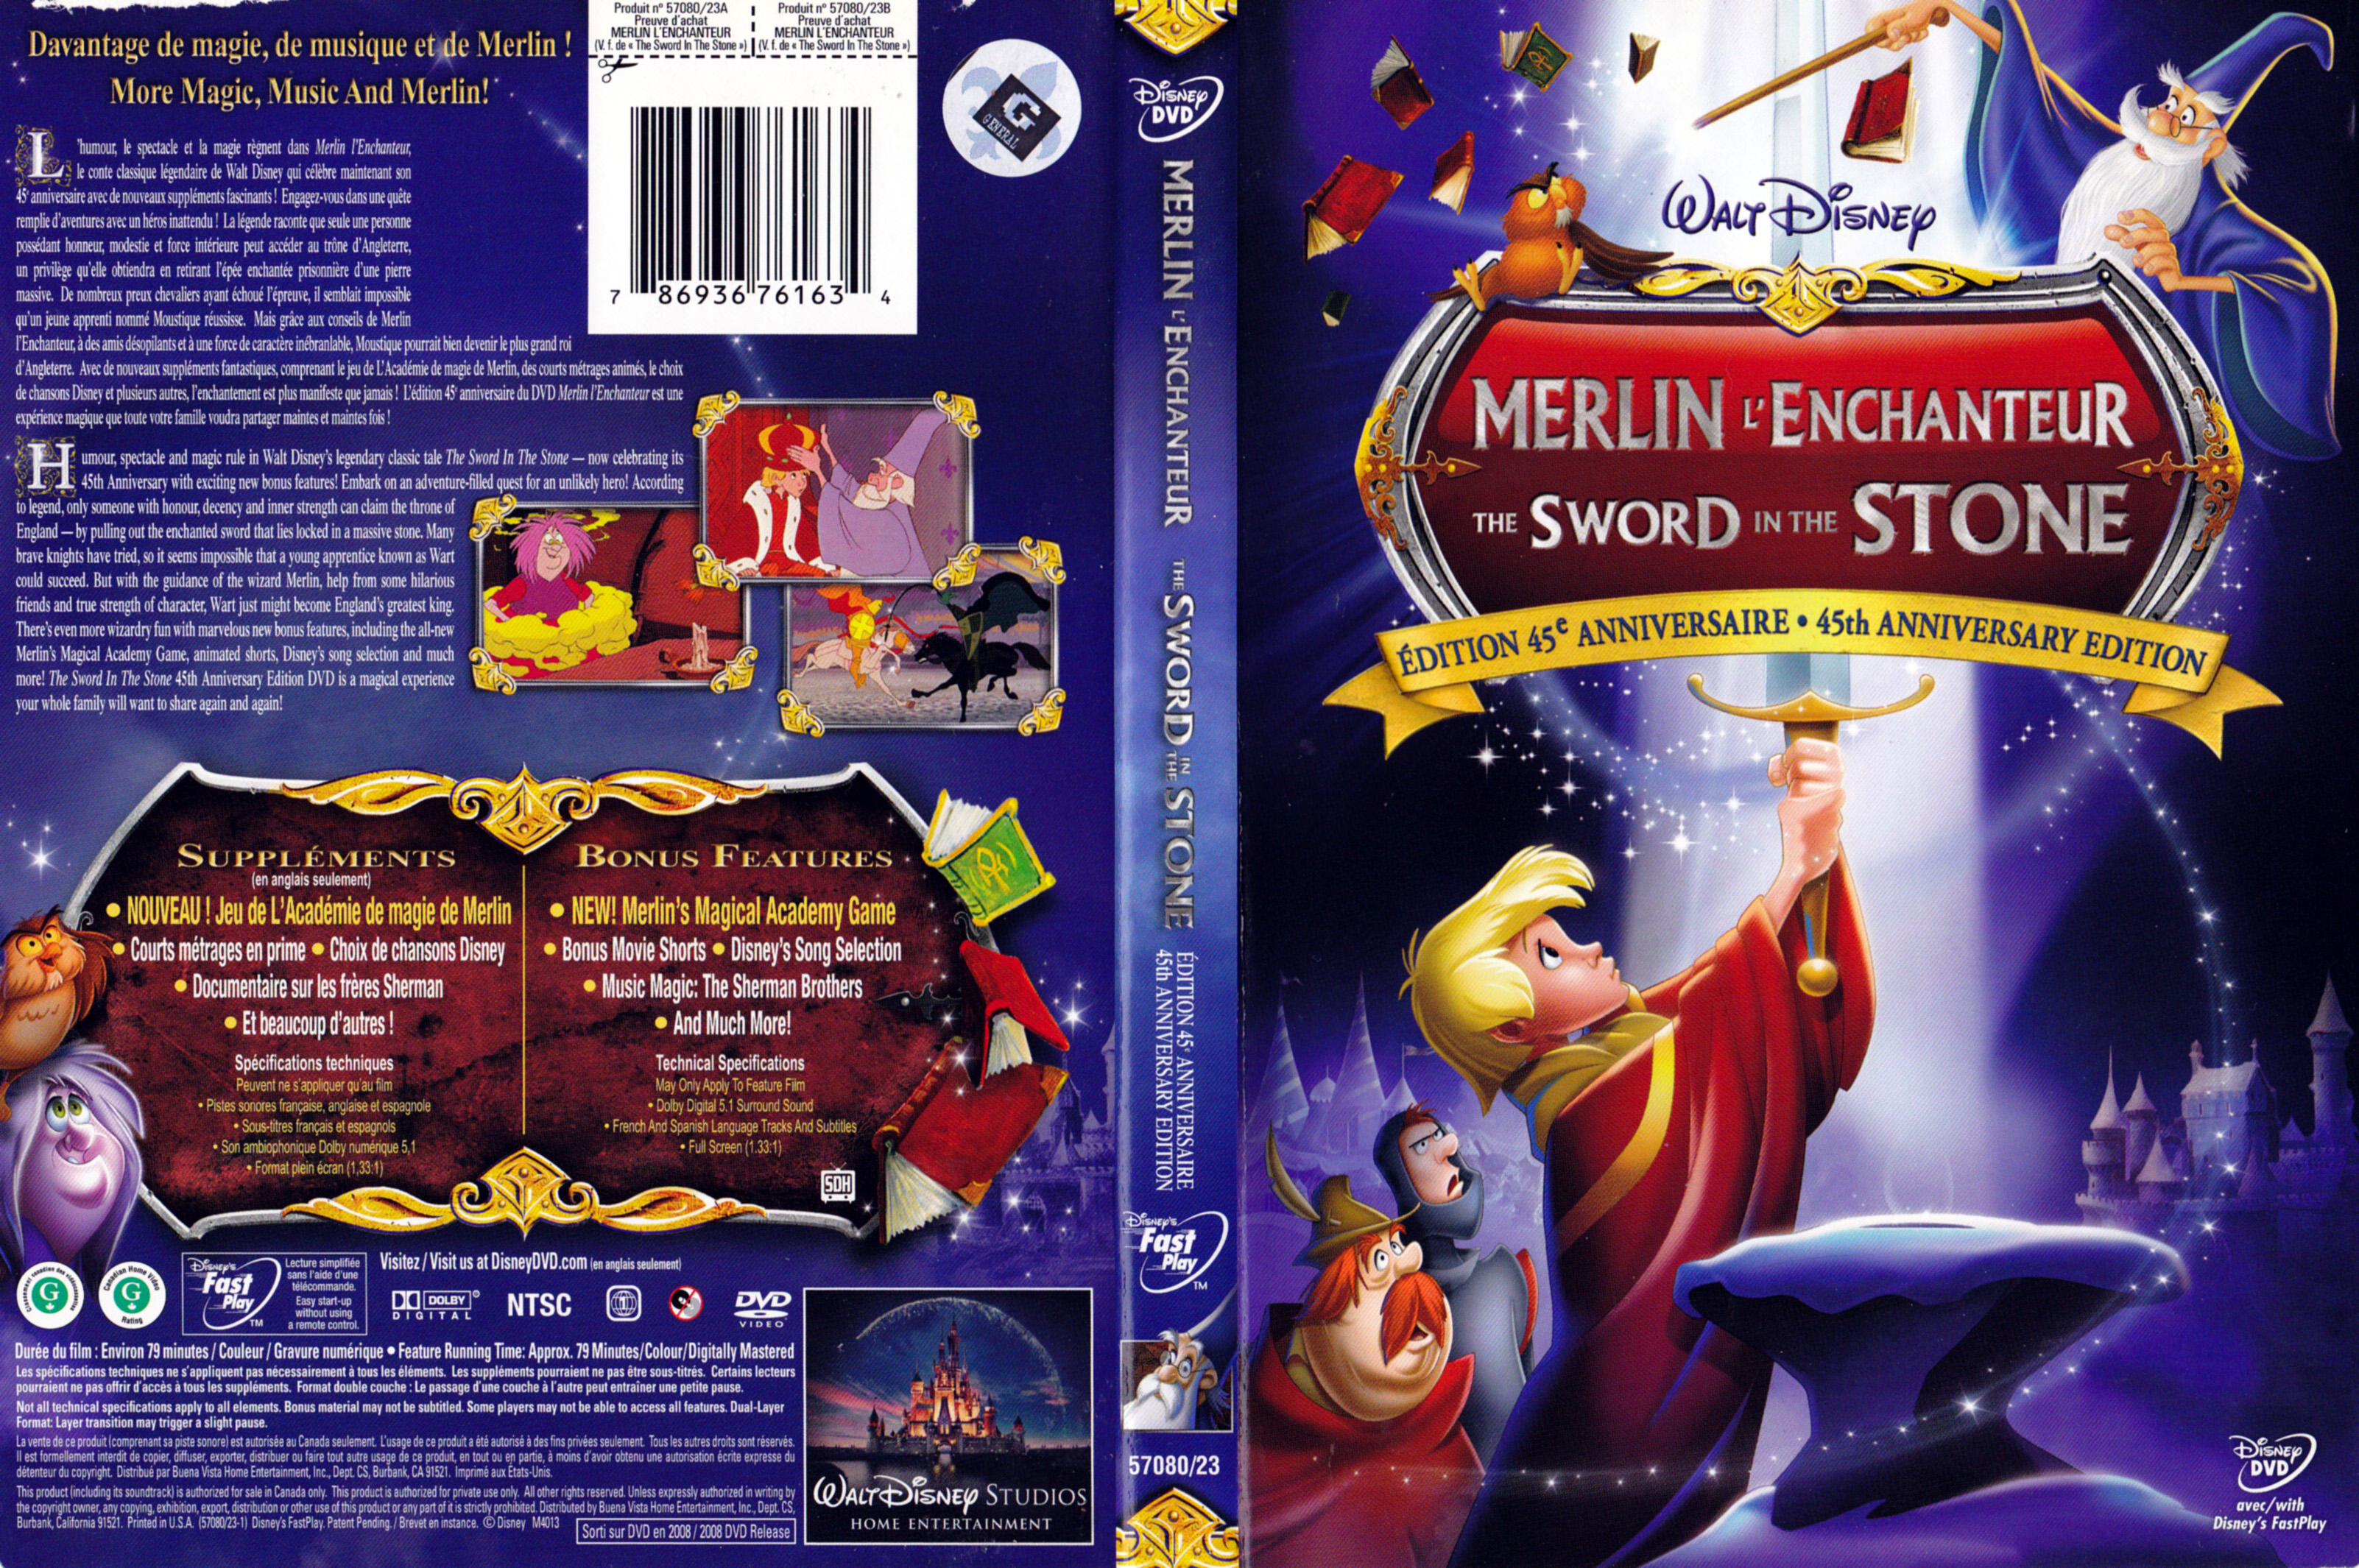 Jaquette DVD Merlin l